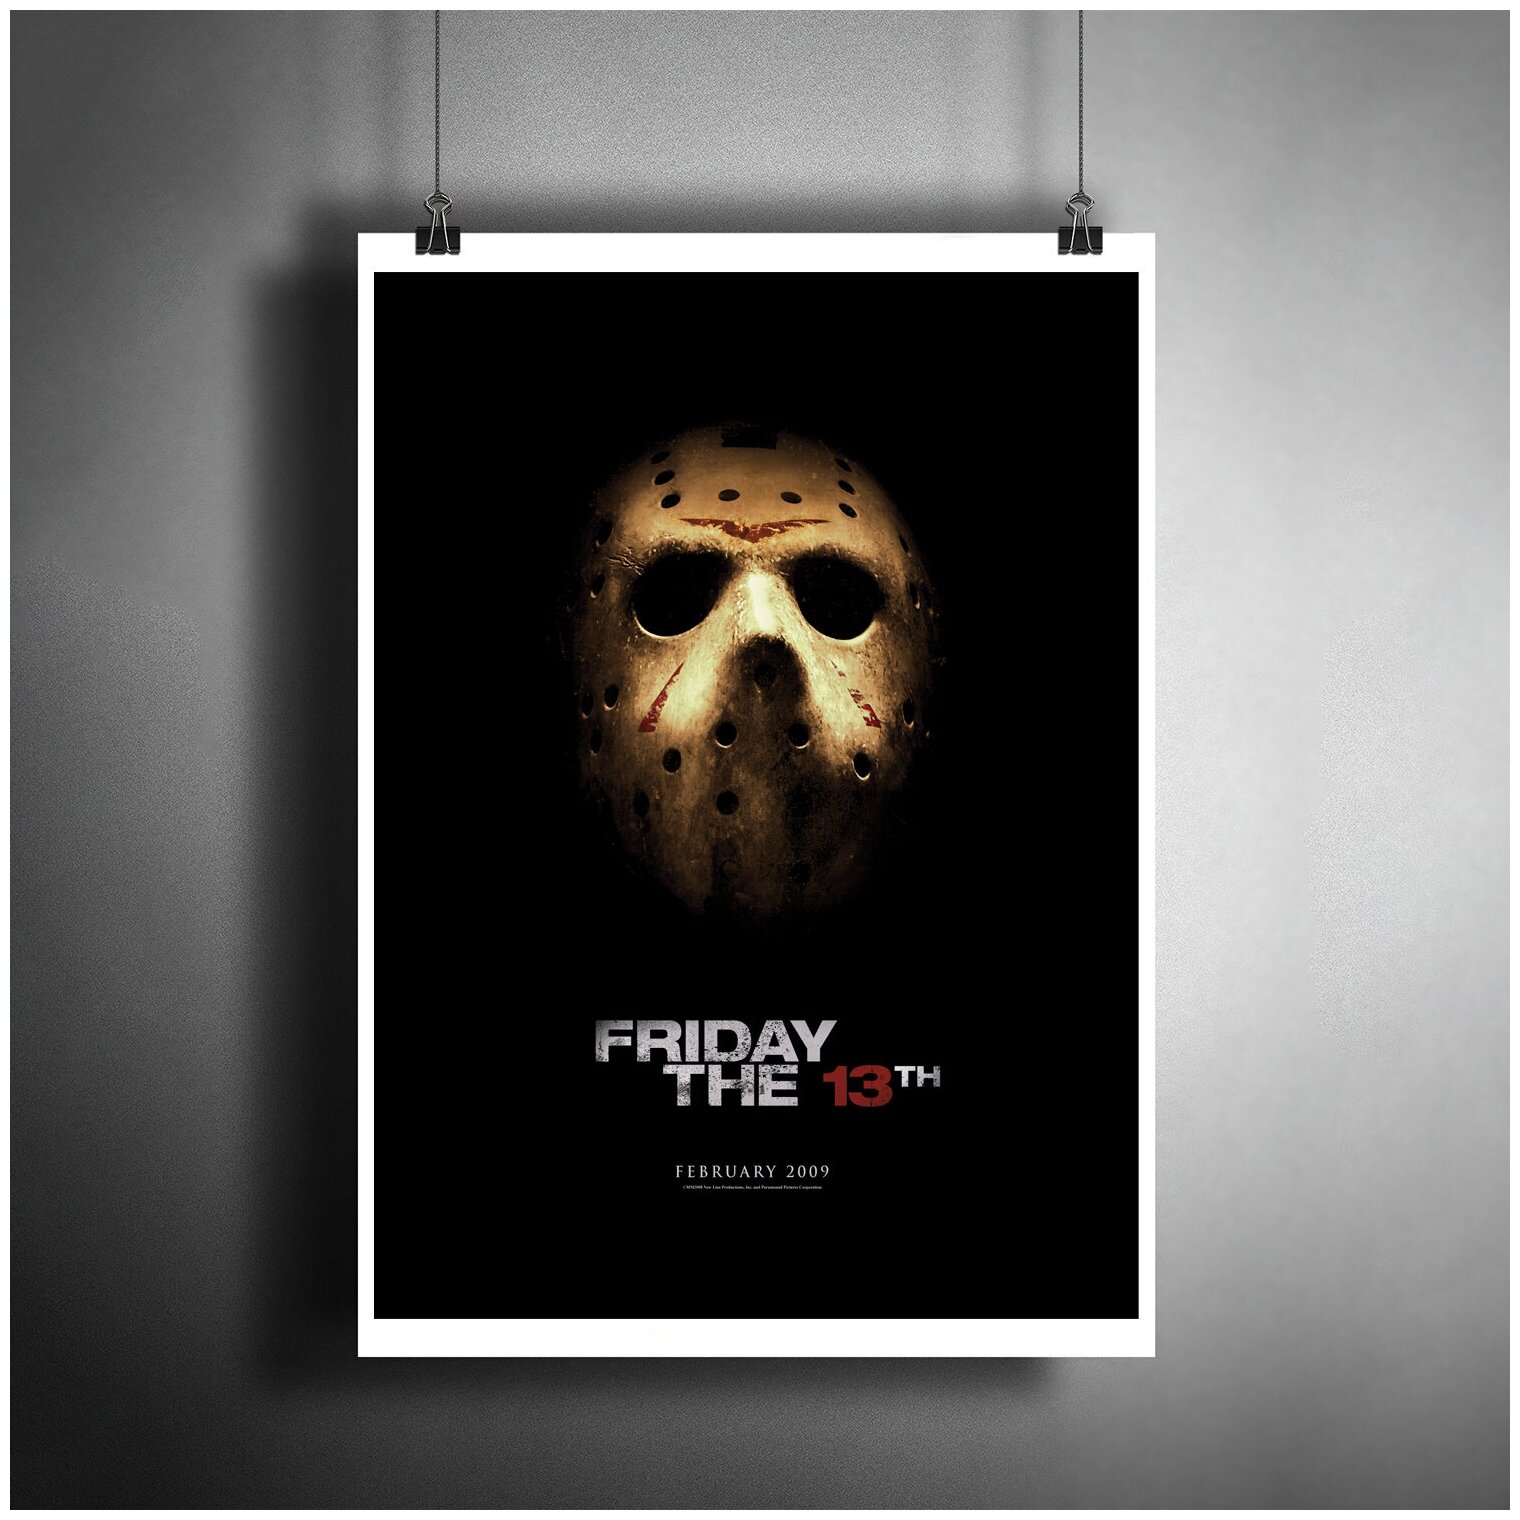 Постер плакат для интерьера "Фильм ужасов: Пятница 13-е. Friday The 13th. Хэллоуин"/ Декор дома, офиса, комнаты A3 (297 x 420 мм)